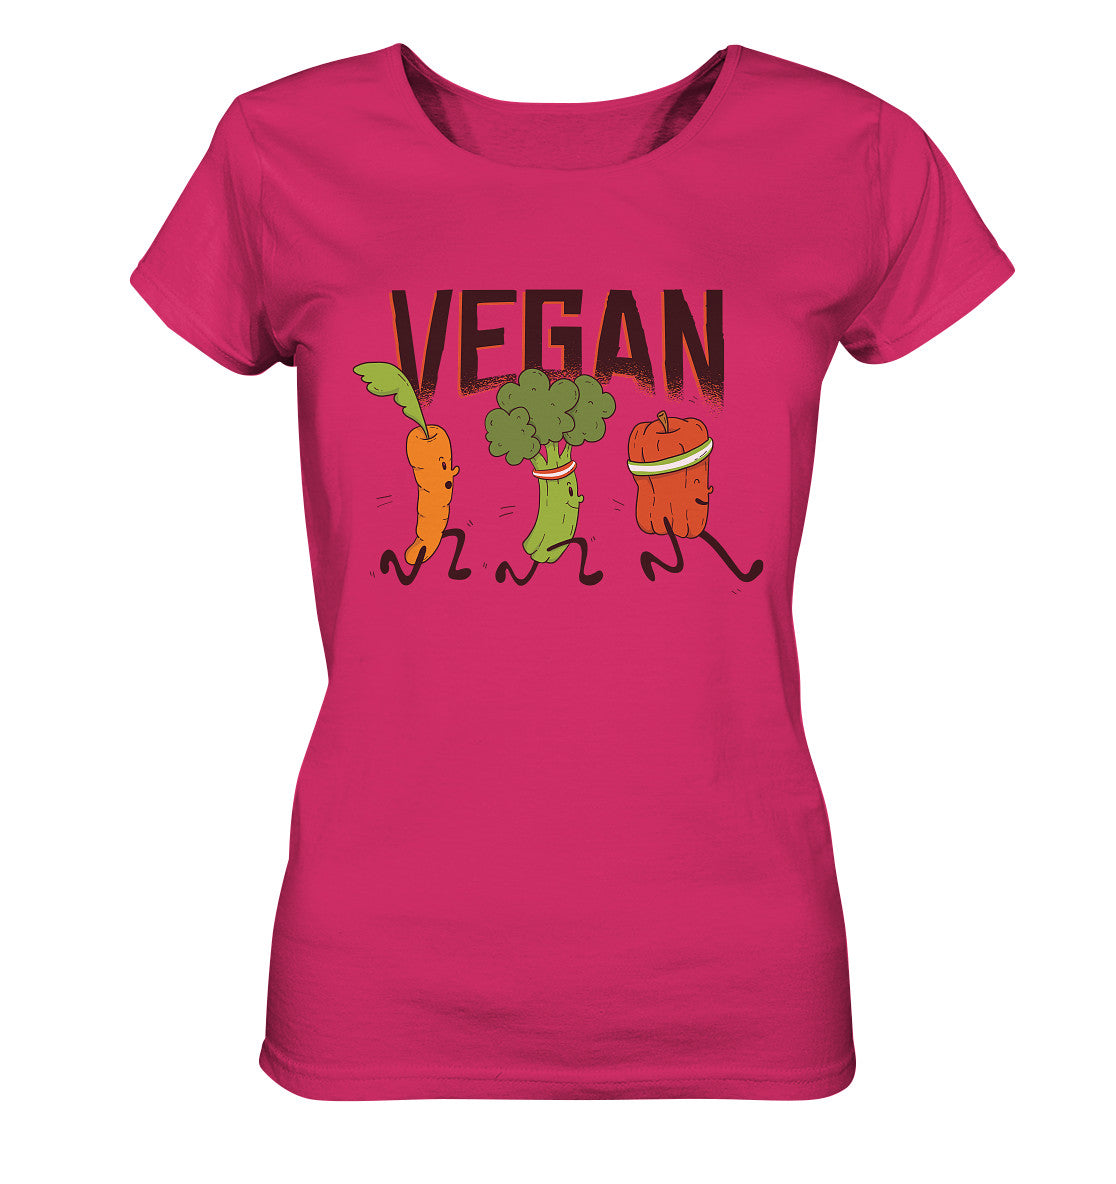 Vegan runners - Damen Bio Shirt